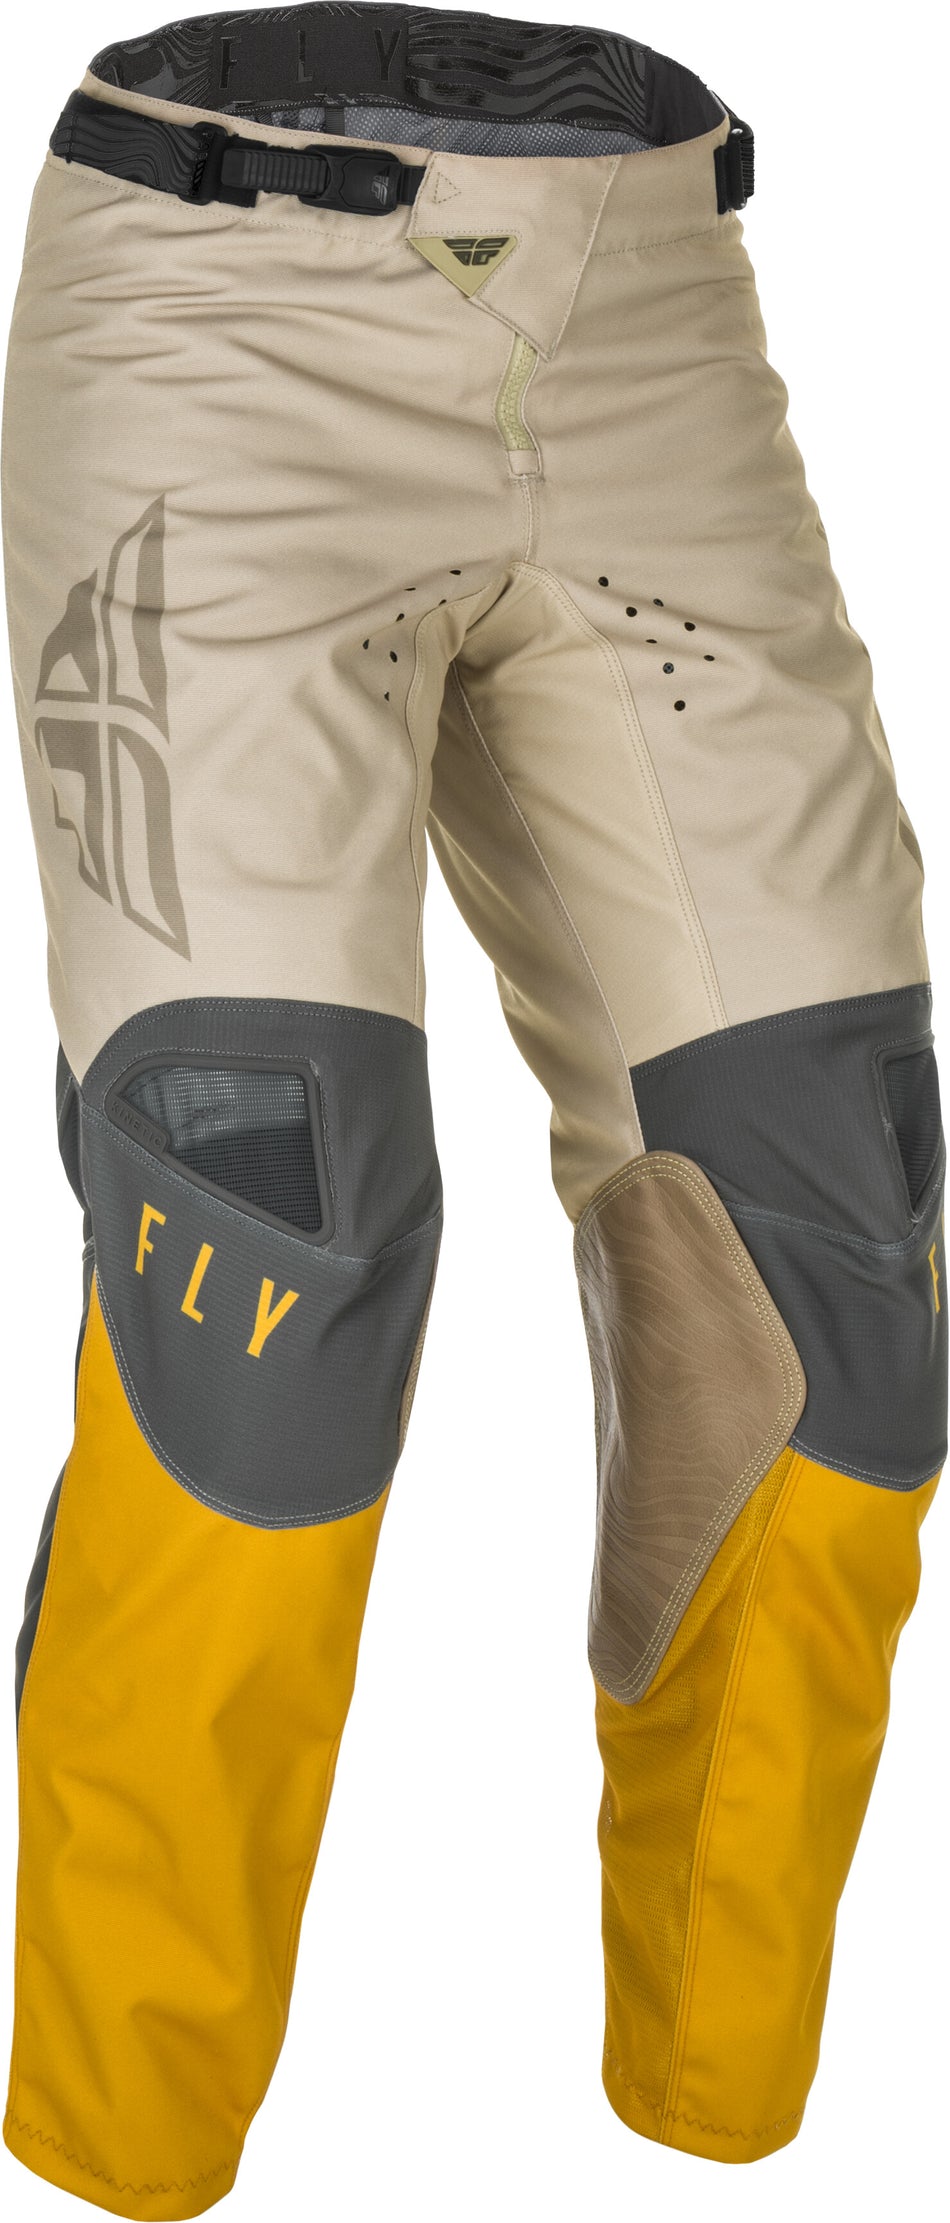 FLY RACING Kinetic K121 Pants Mustard/Stone/Grey Sz 38 374-43338